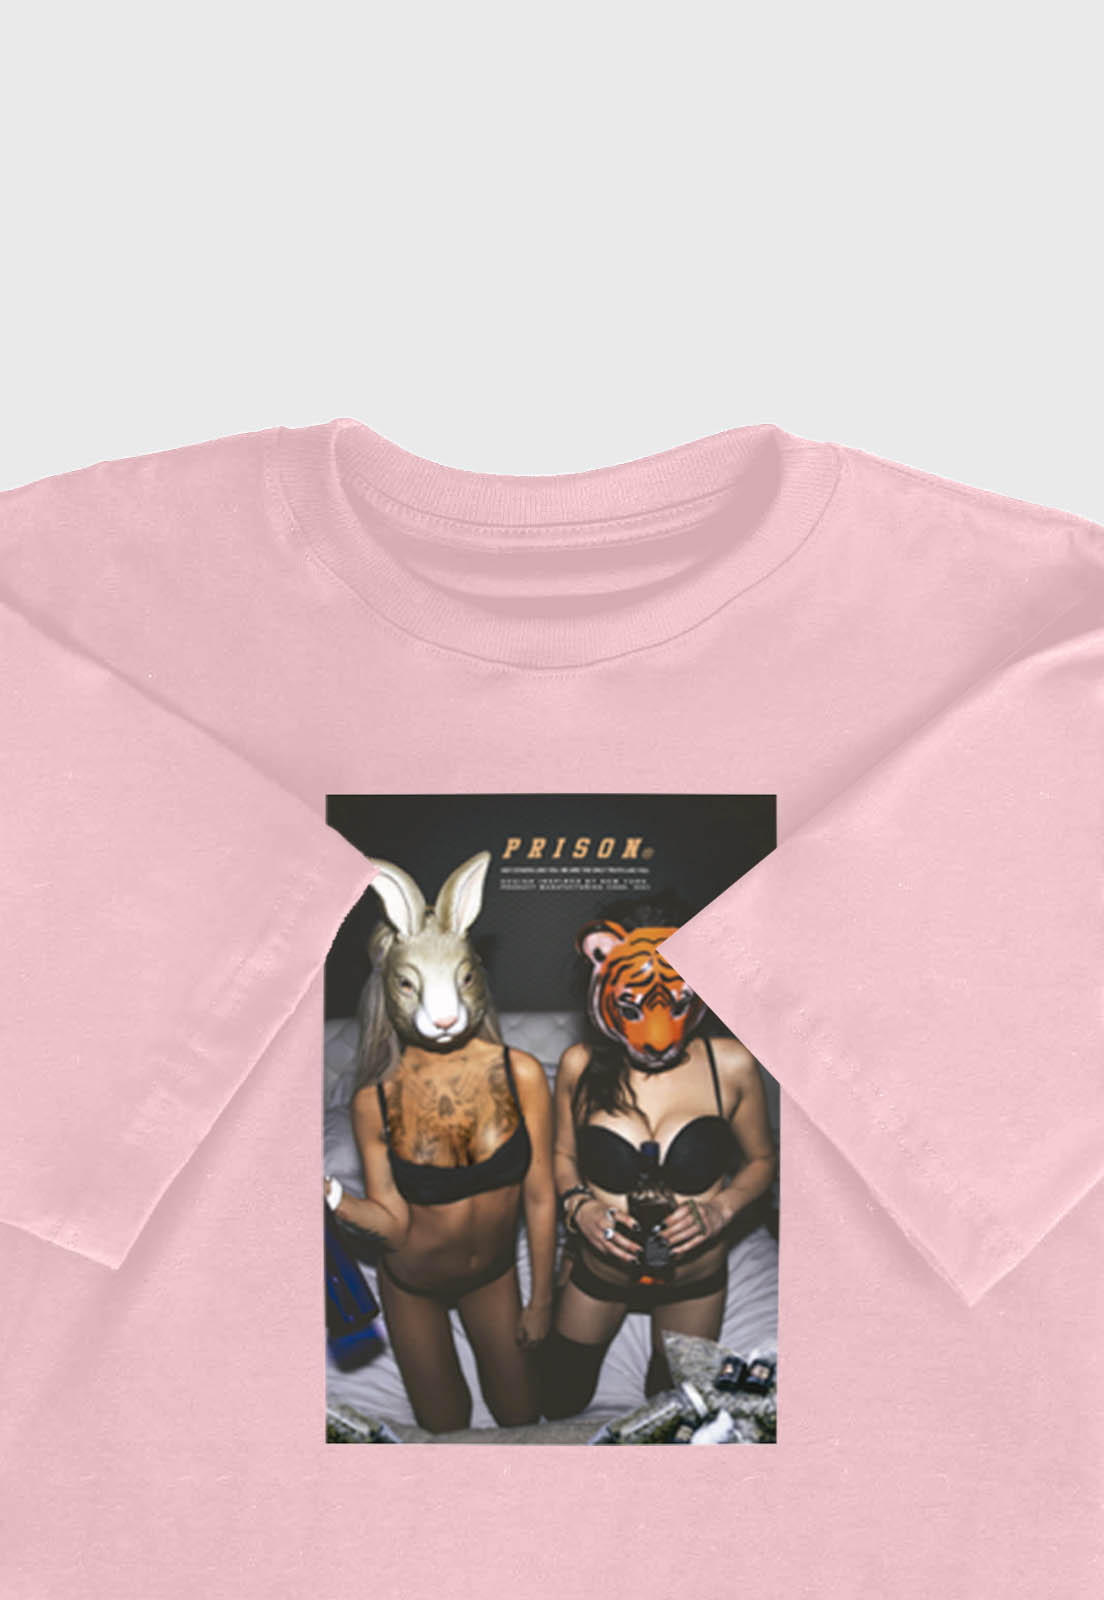 Camiseta Streetwear Prison Pink sexy fantasy